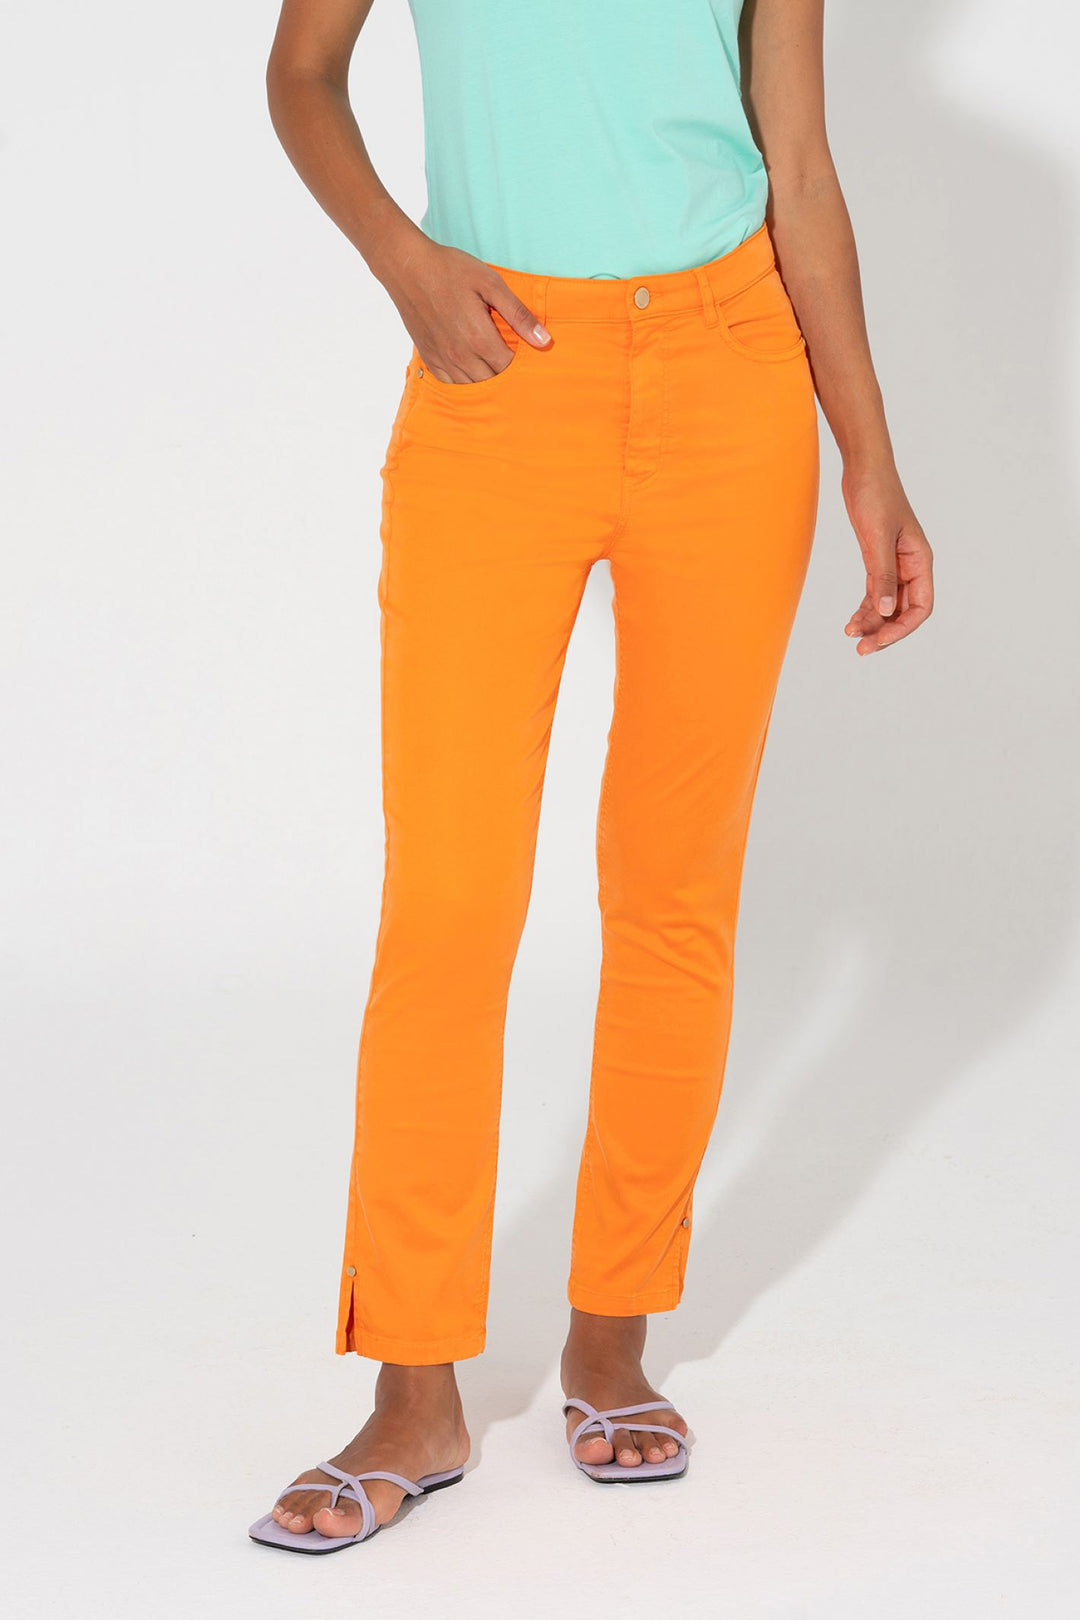 Bariloche Orbita Orange Jean